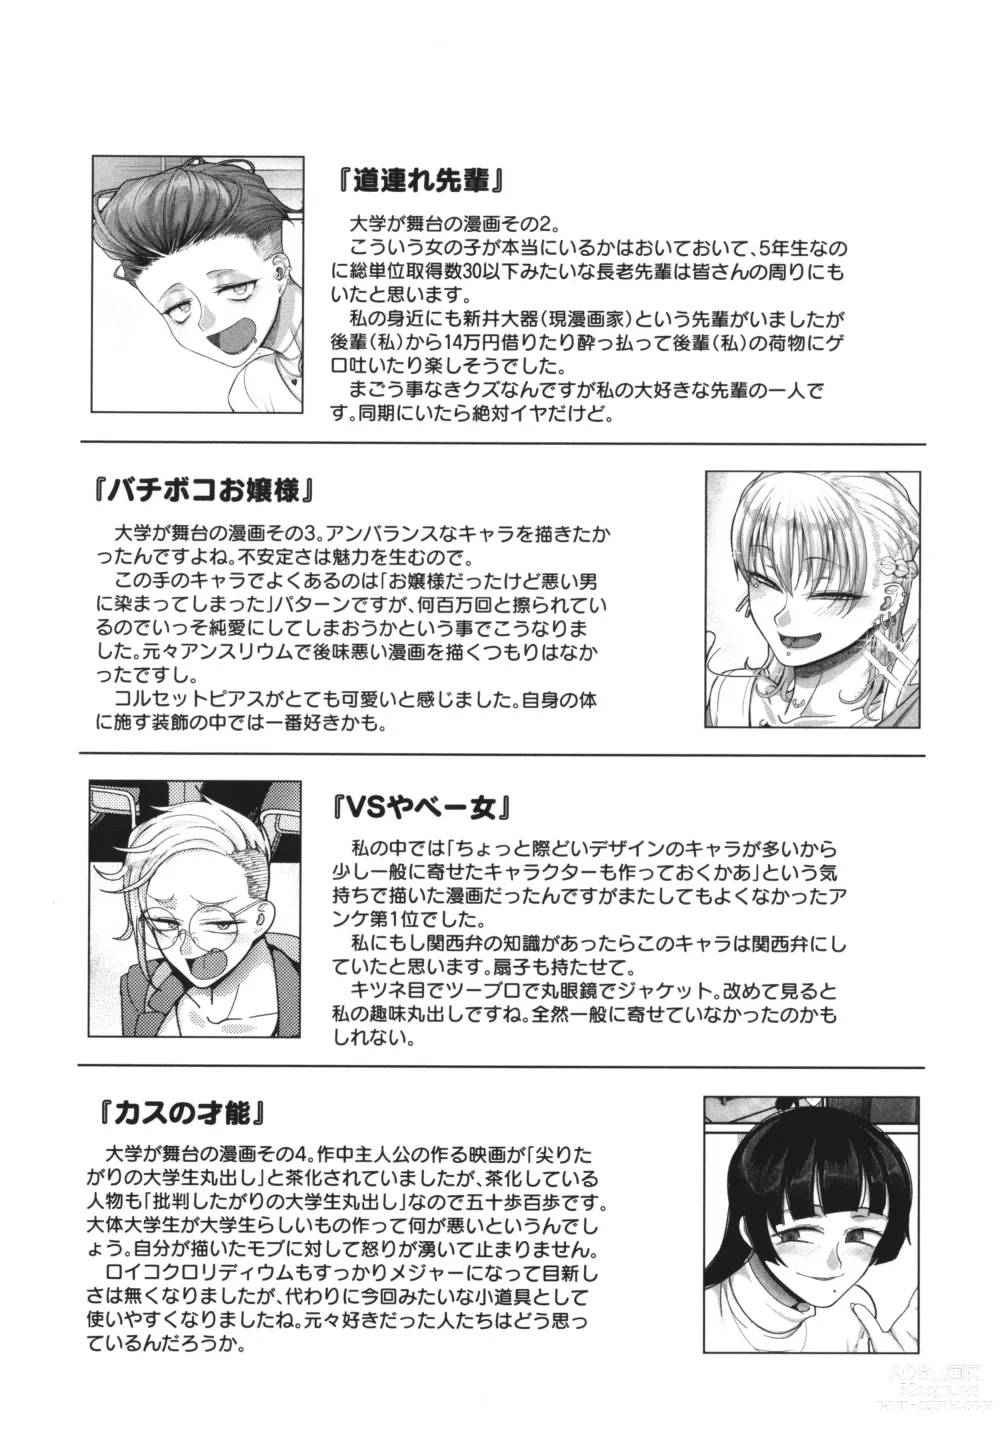 Page 203 of manga Nani Miten da yo! - What are you looking at?